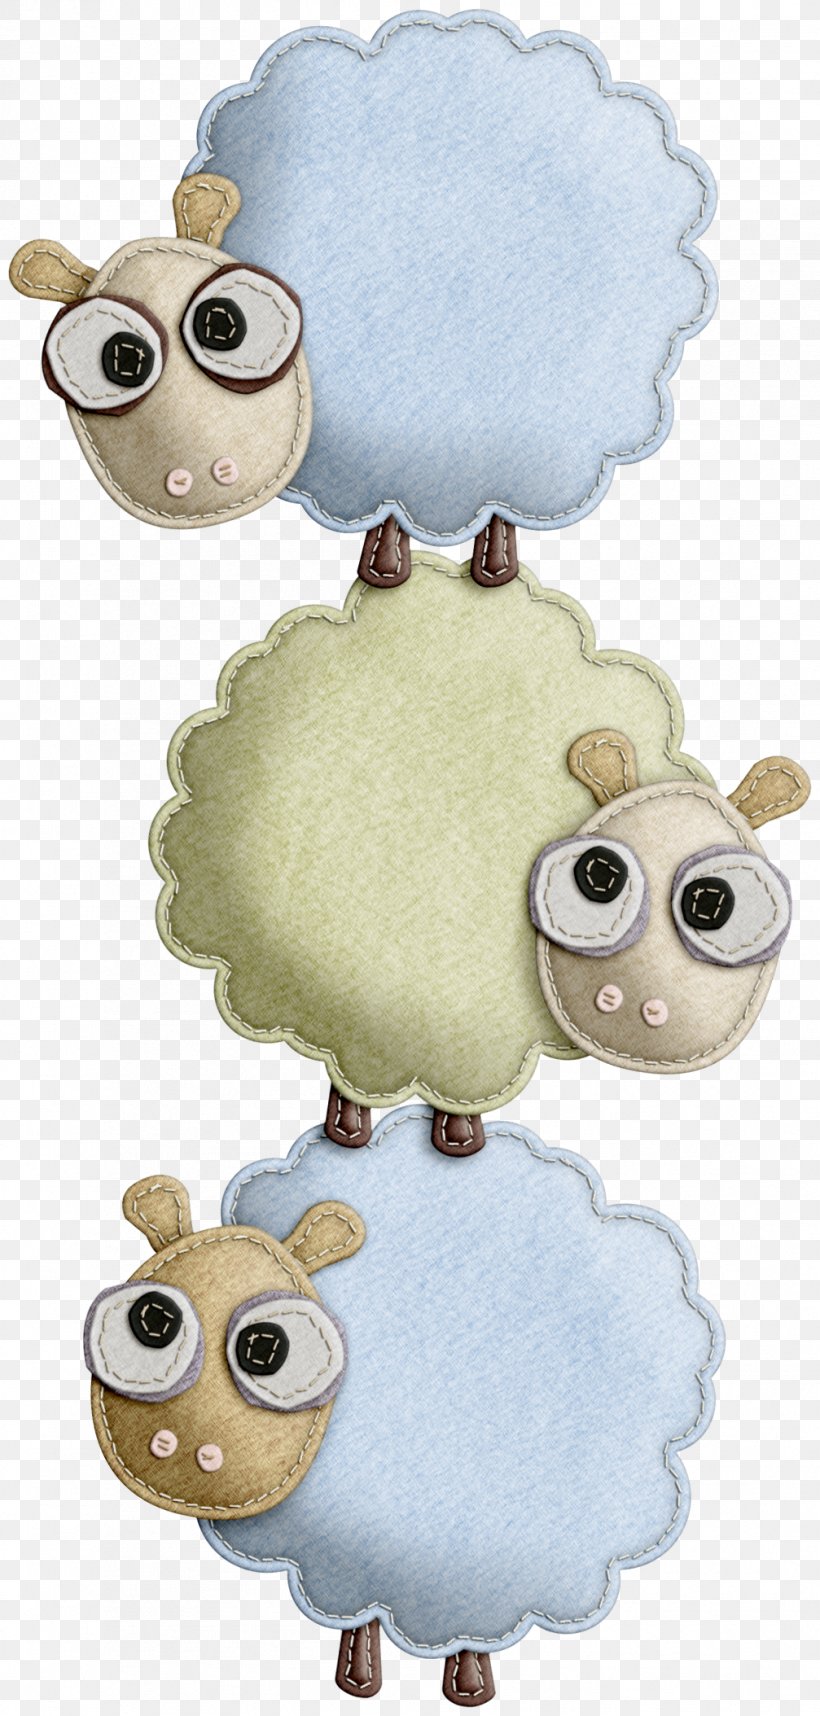 Sheep Stuffed Animals & Cuddly Toys Animated Cartoon, PNG, 1007x2108px, Sheep, Animated Cartoon, Cartoon, Stuffed Animals Cuddly Toys, Stuffed Toy Download Free